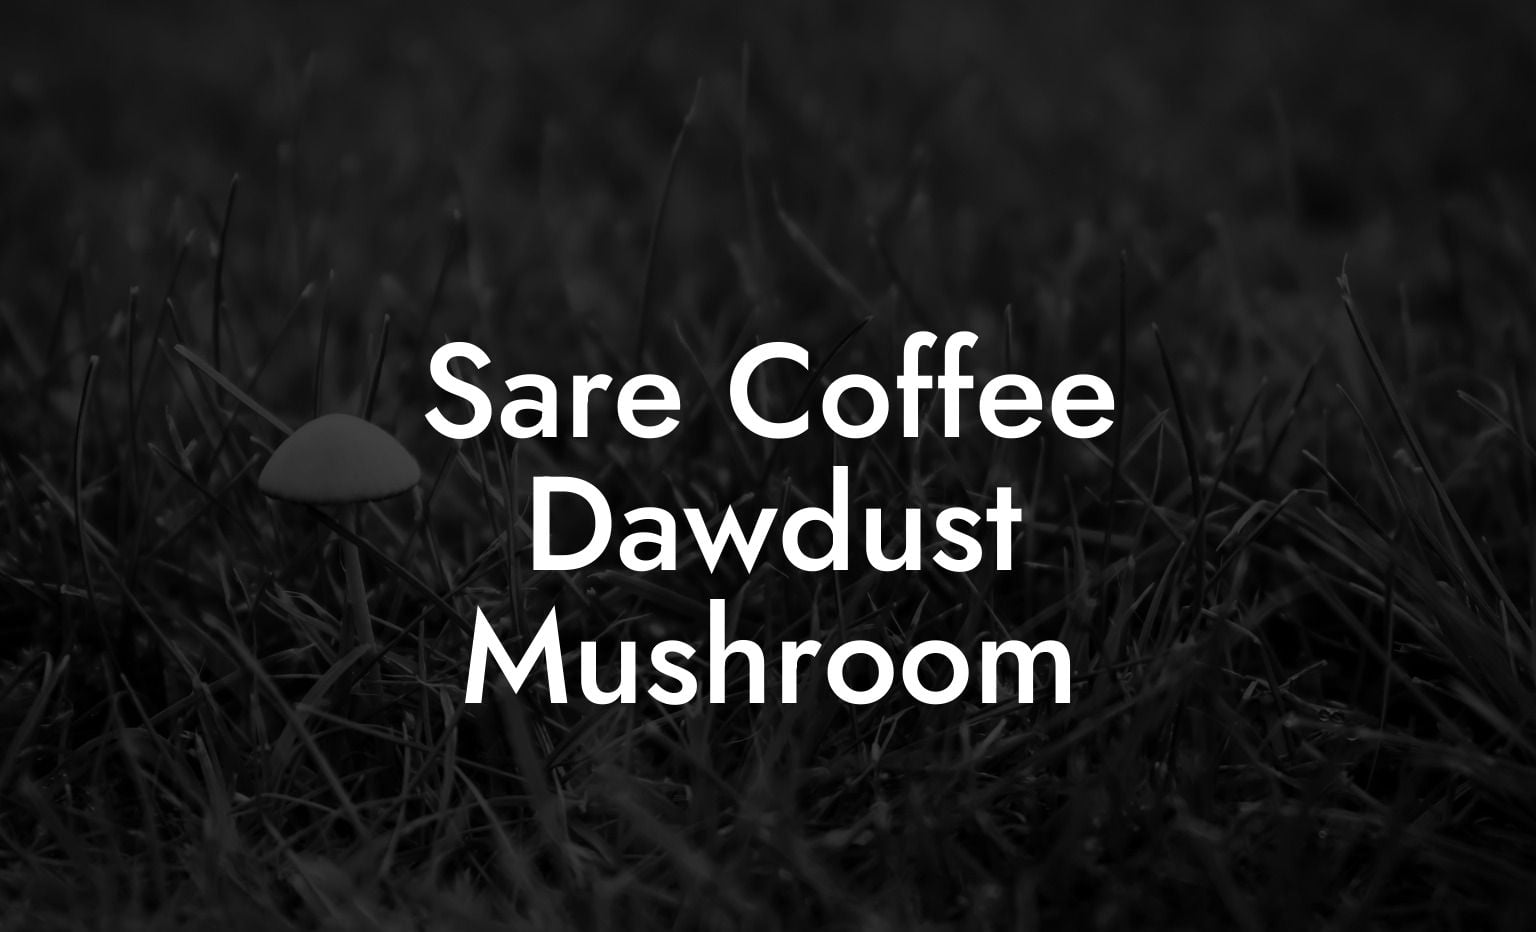 Sare Coffee Dawdust Mushroom